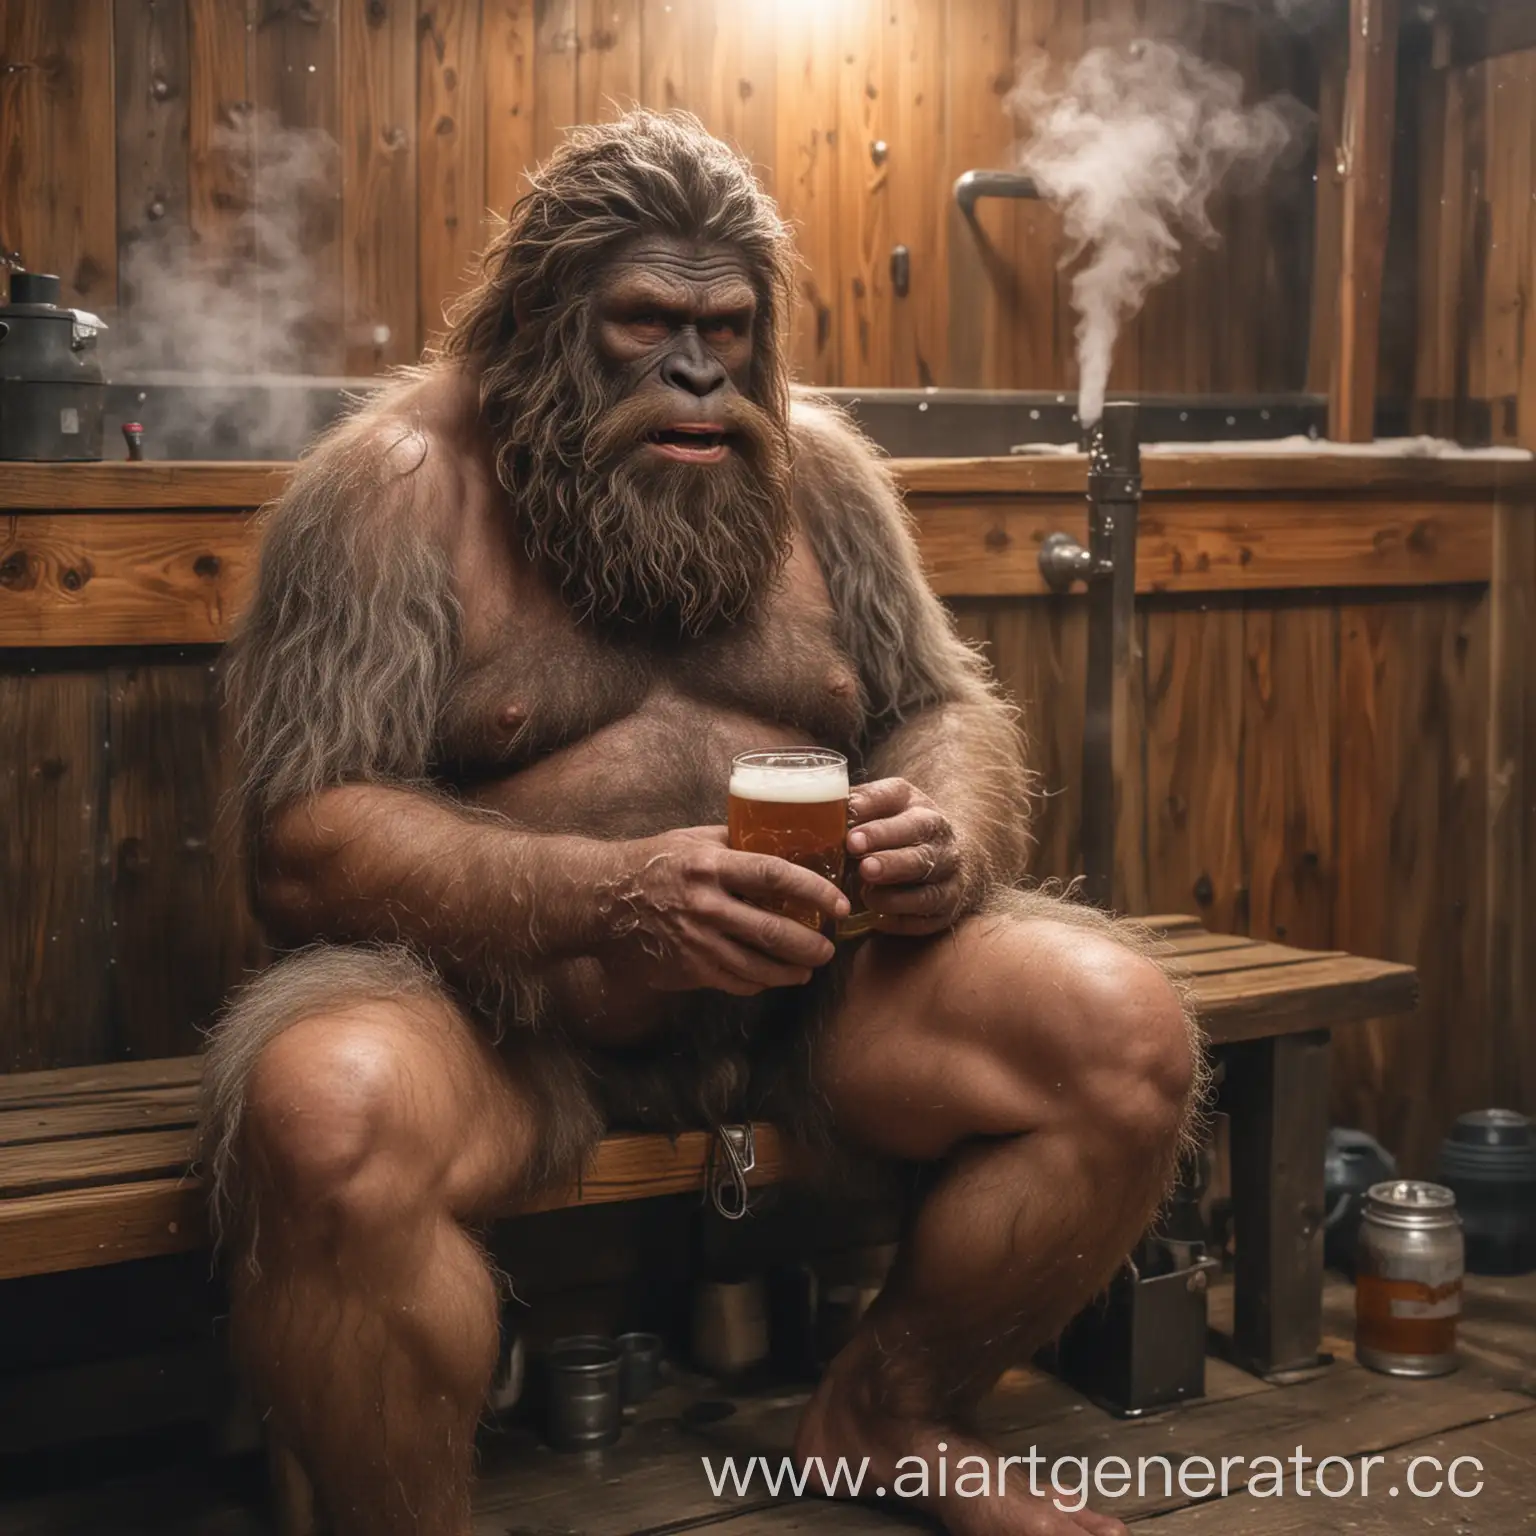 мохнатый бигфут сидит на лавке в бане, пьет пиво, вокруг пар